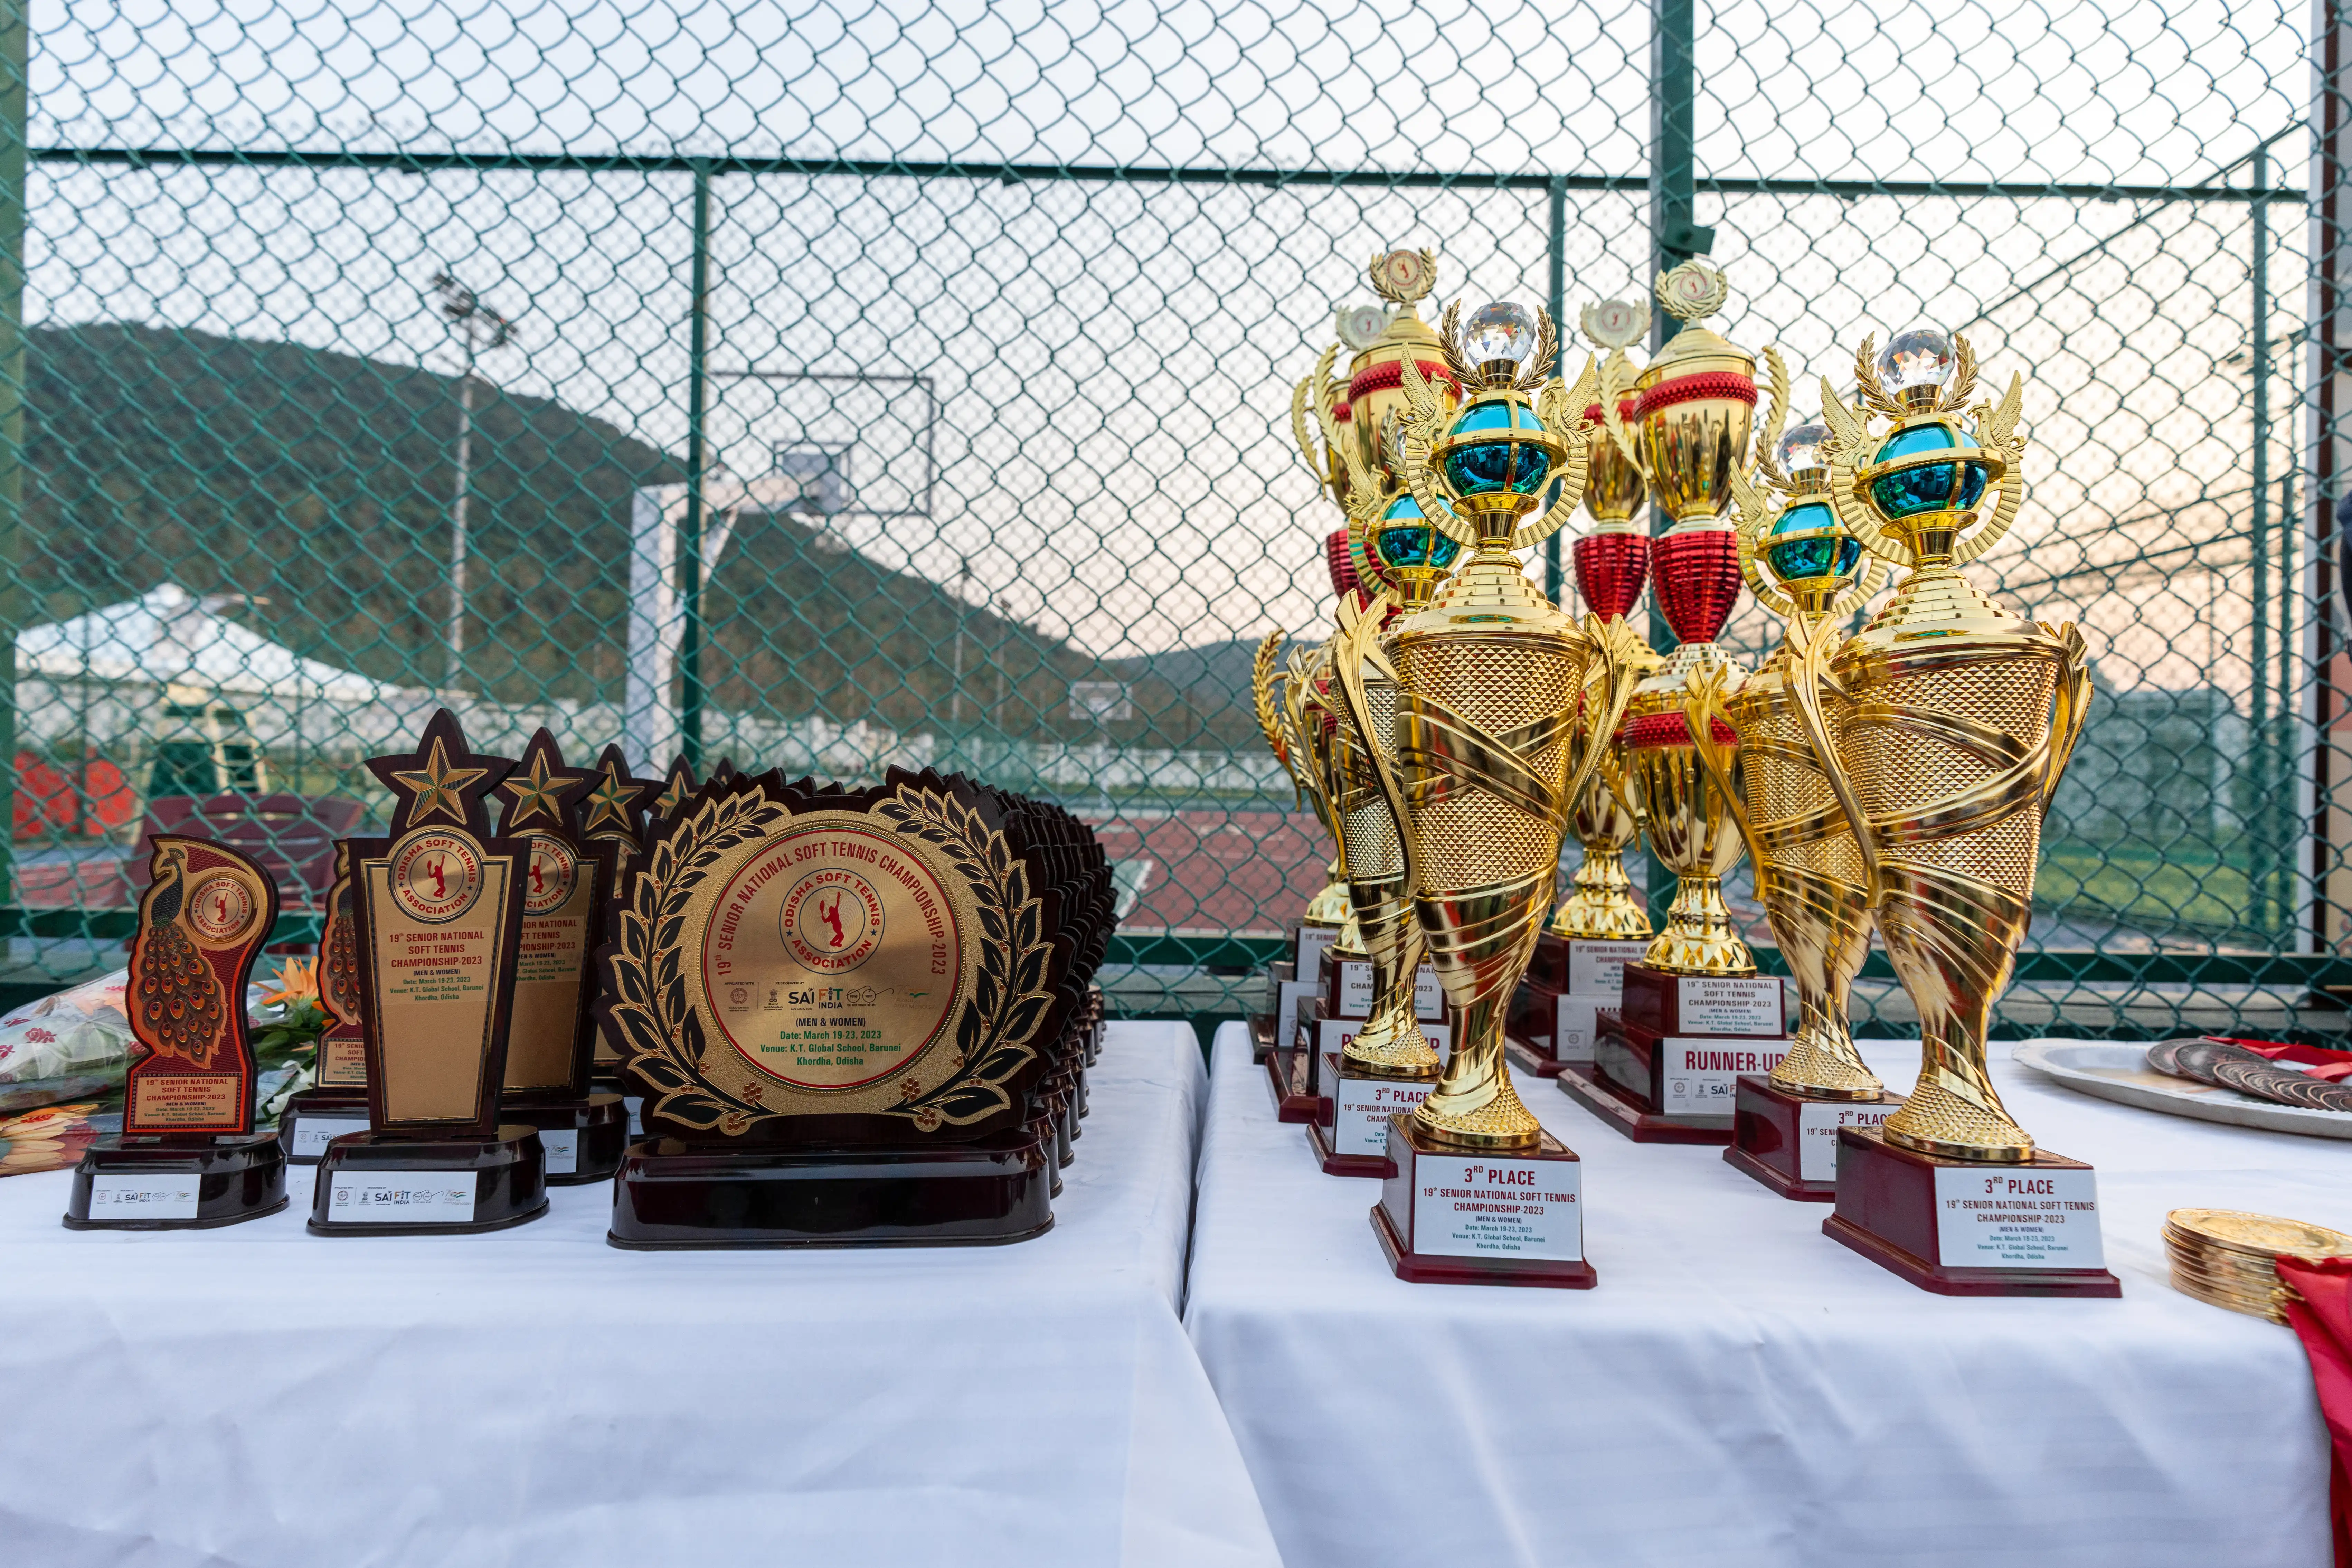 19th Soft Tennis Championship 1